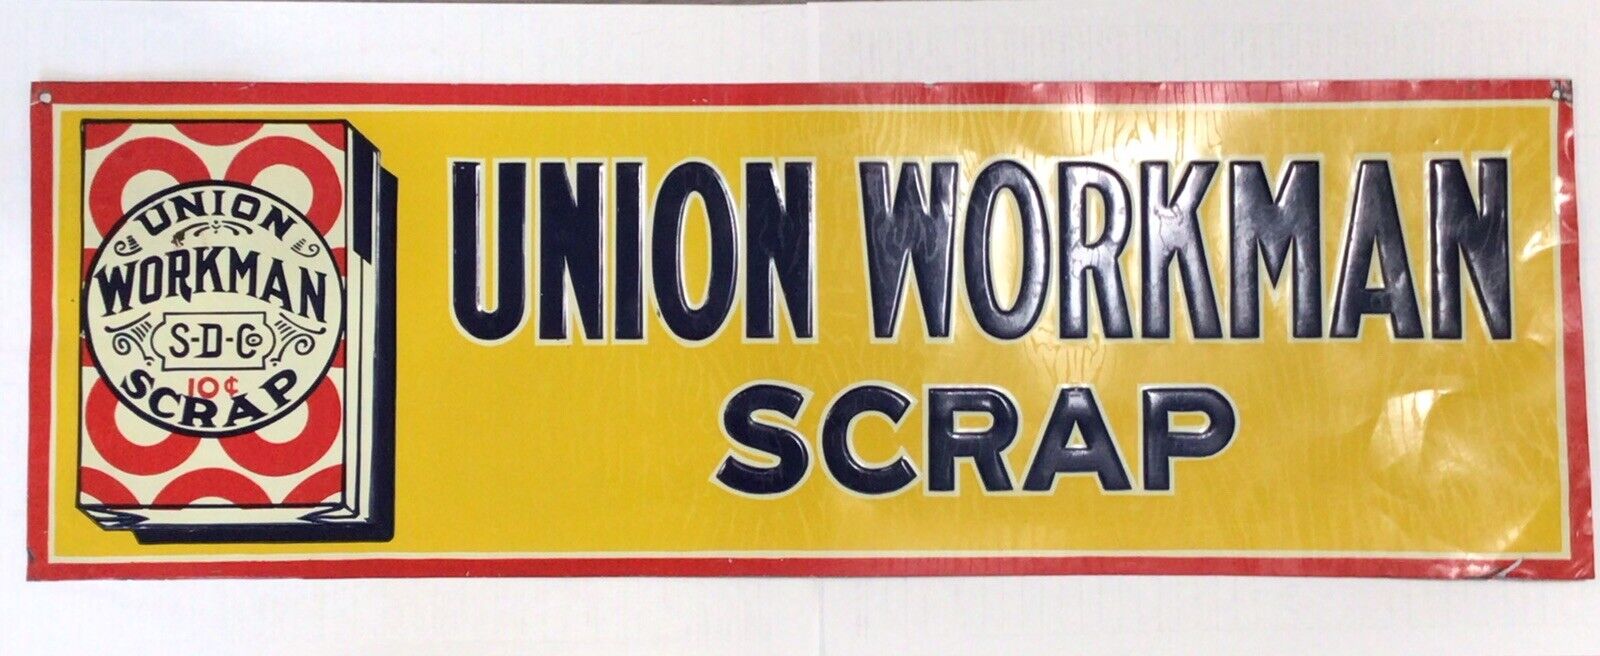 Rare Vintage1940’s Union Workman Scrap tobacco tin sign 10 Cent Original